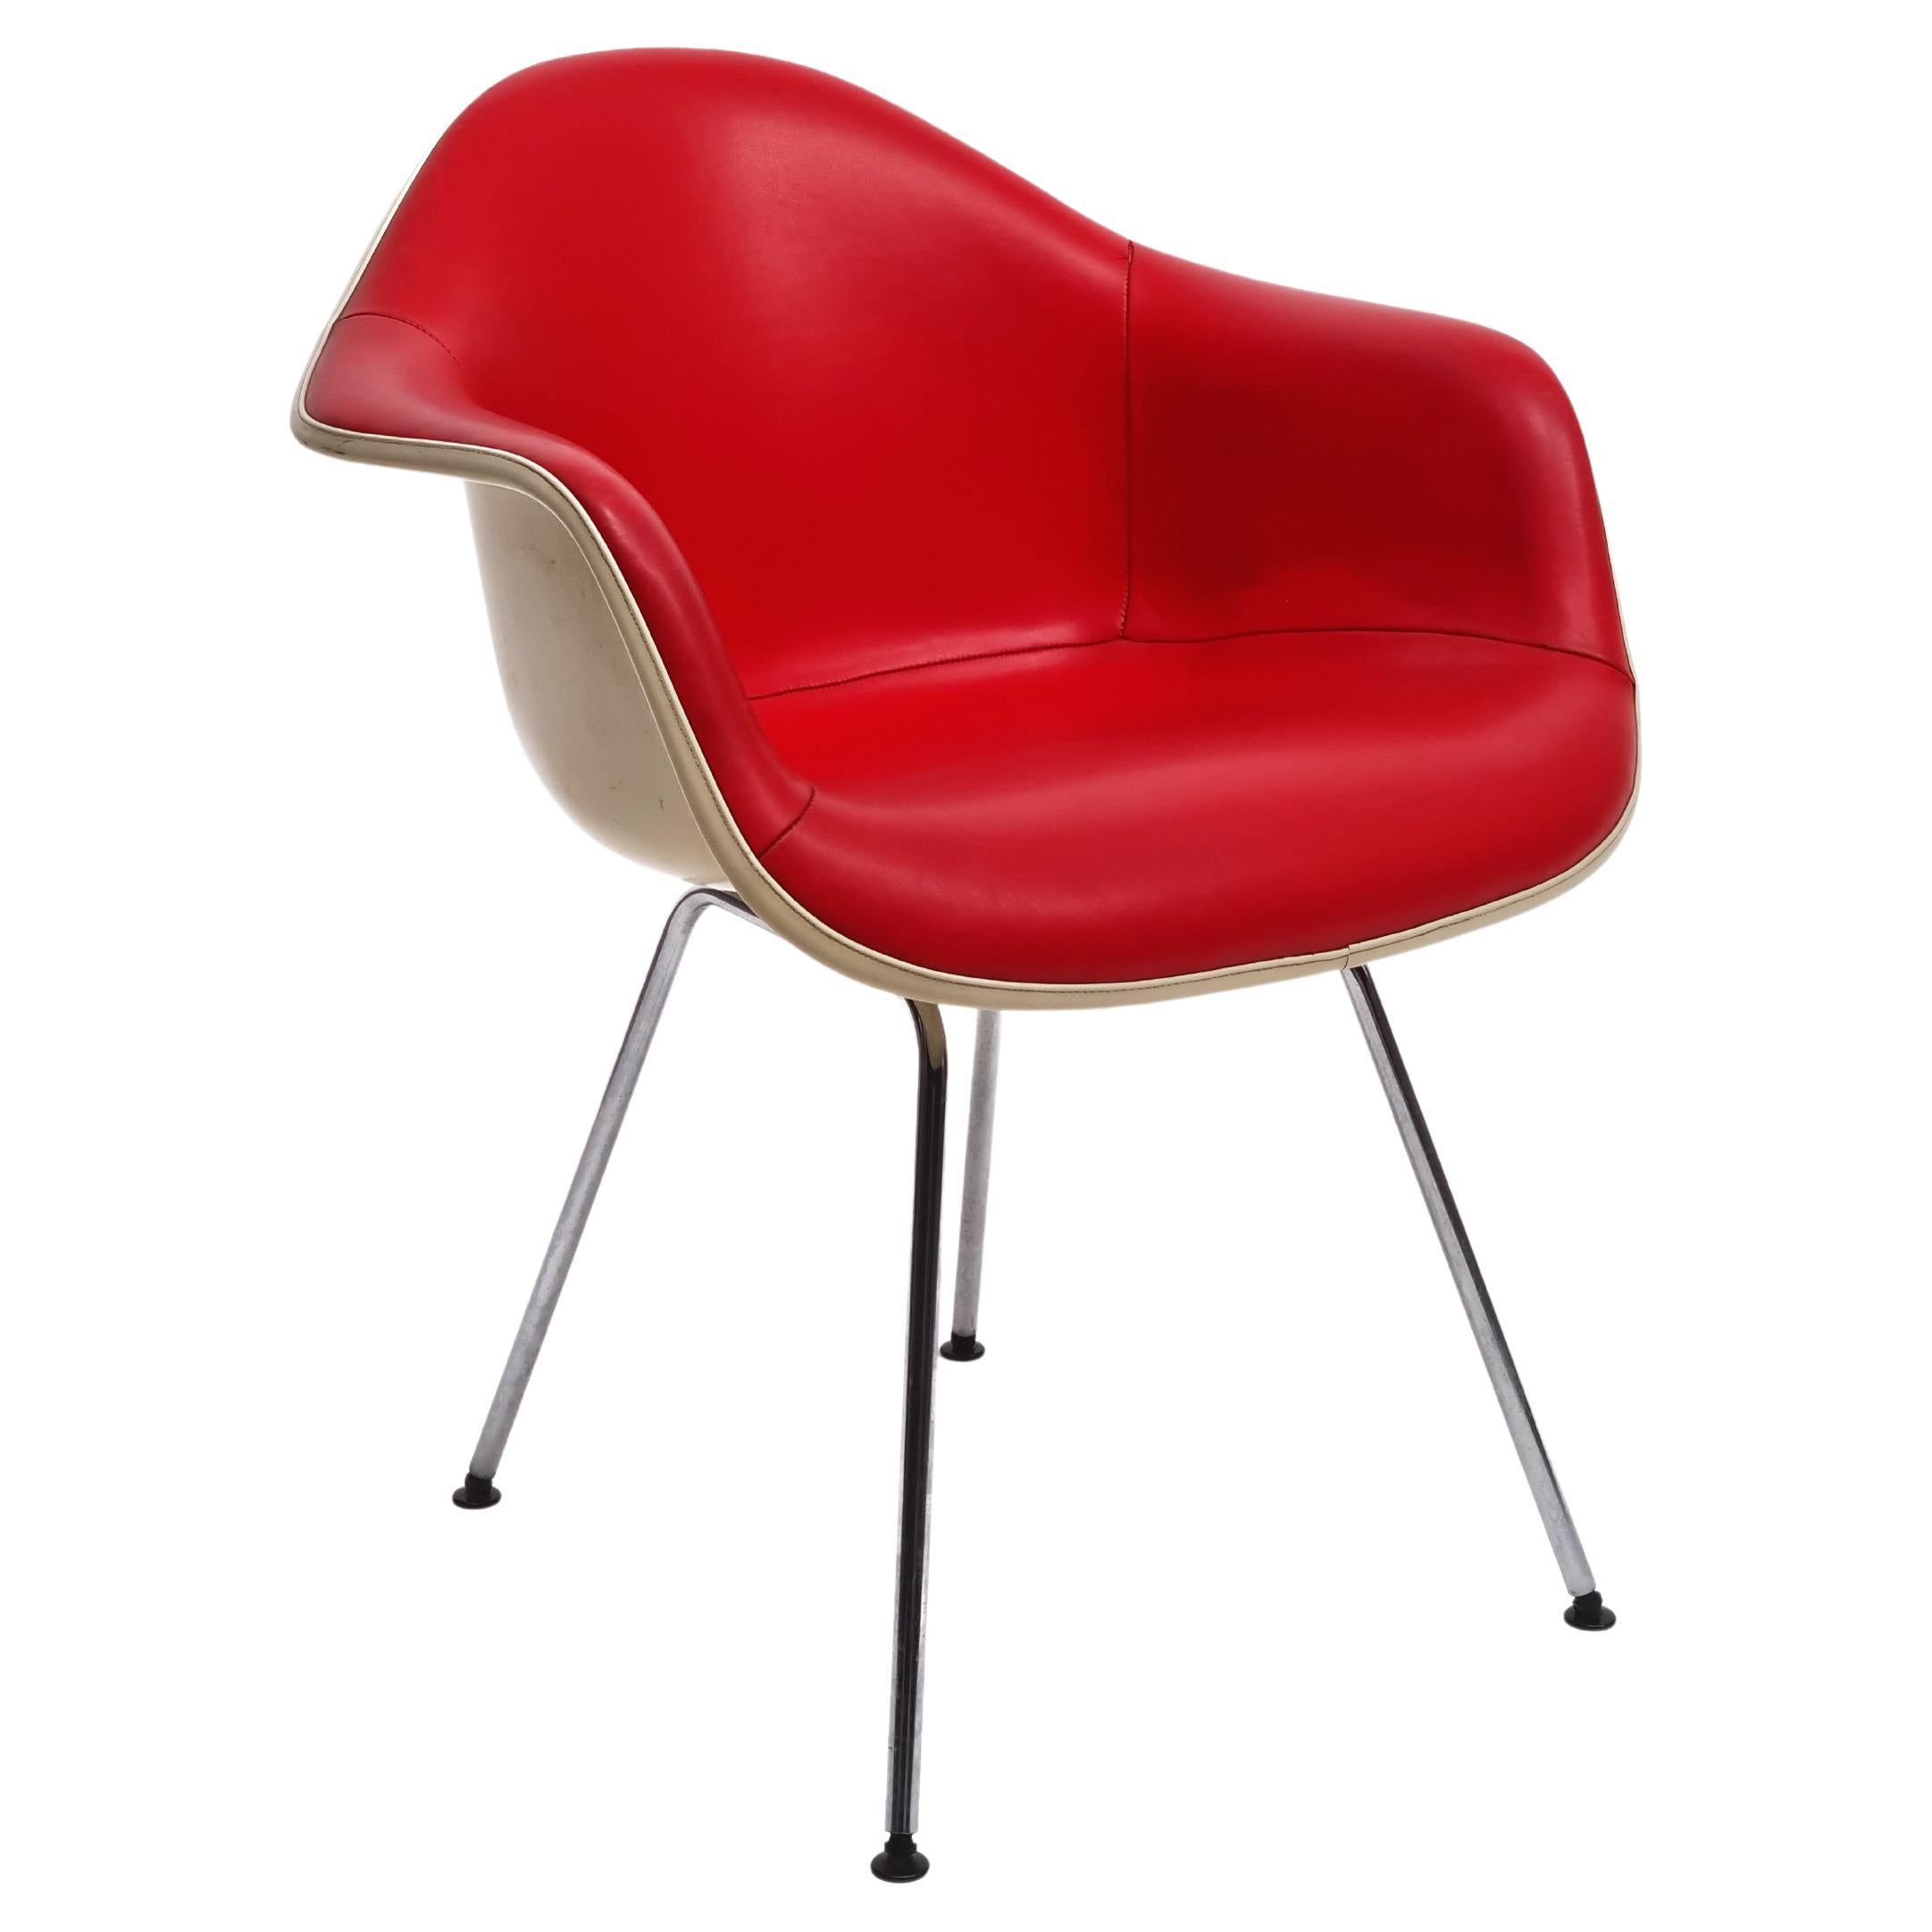 Sessel „Dax“ aus rotem Leder von Charles & Ray Eames, 1960er Jahre